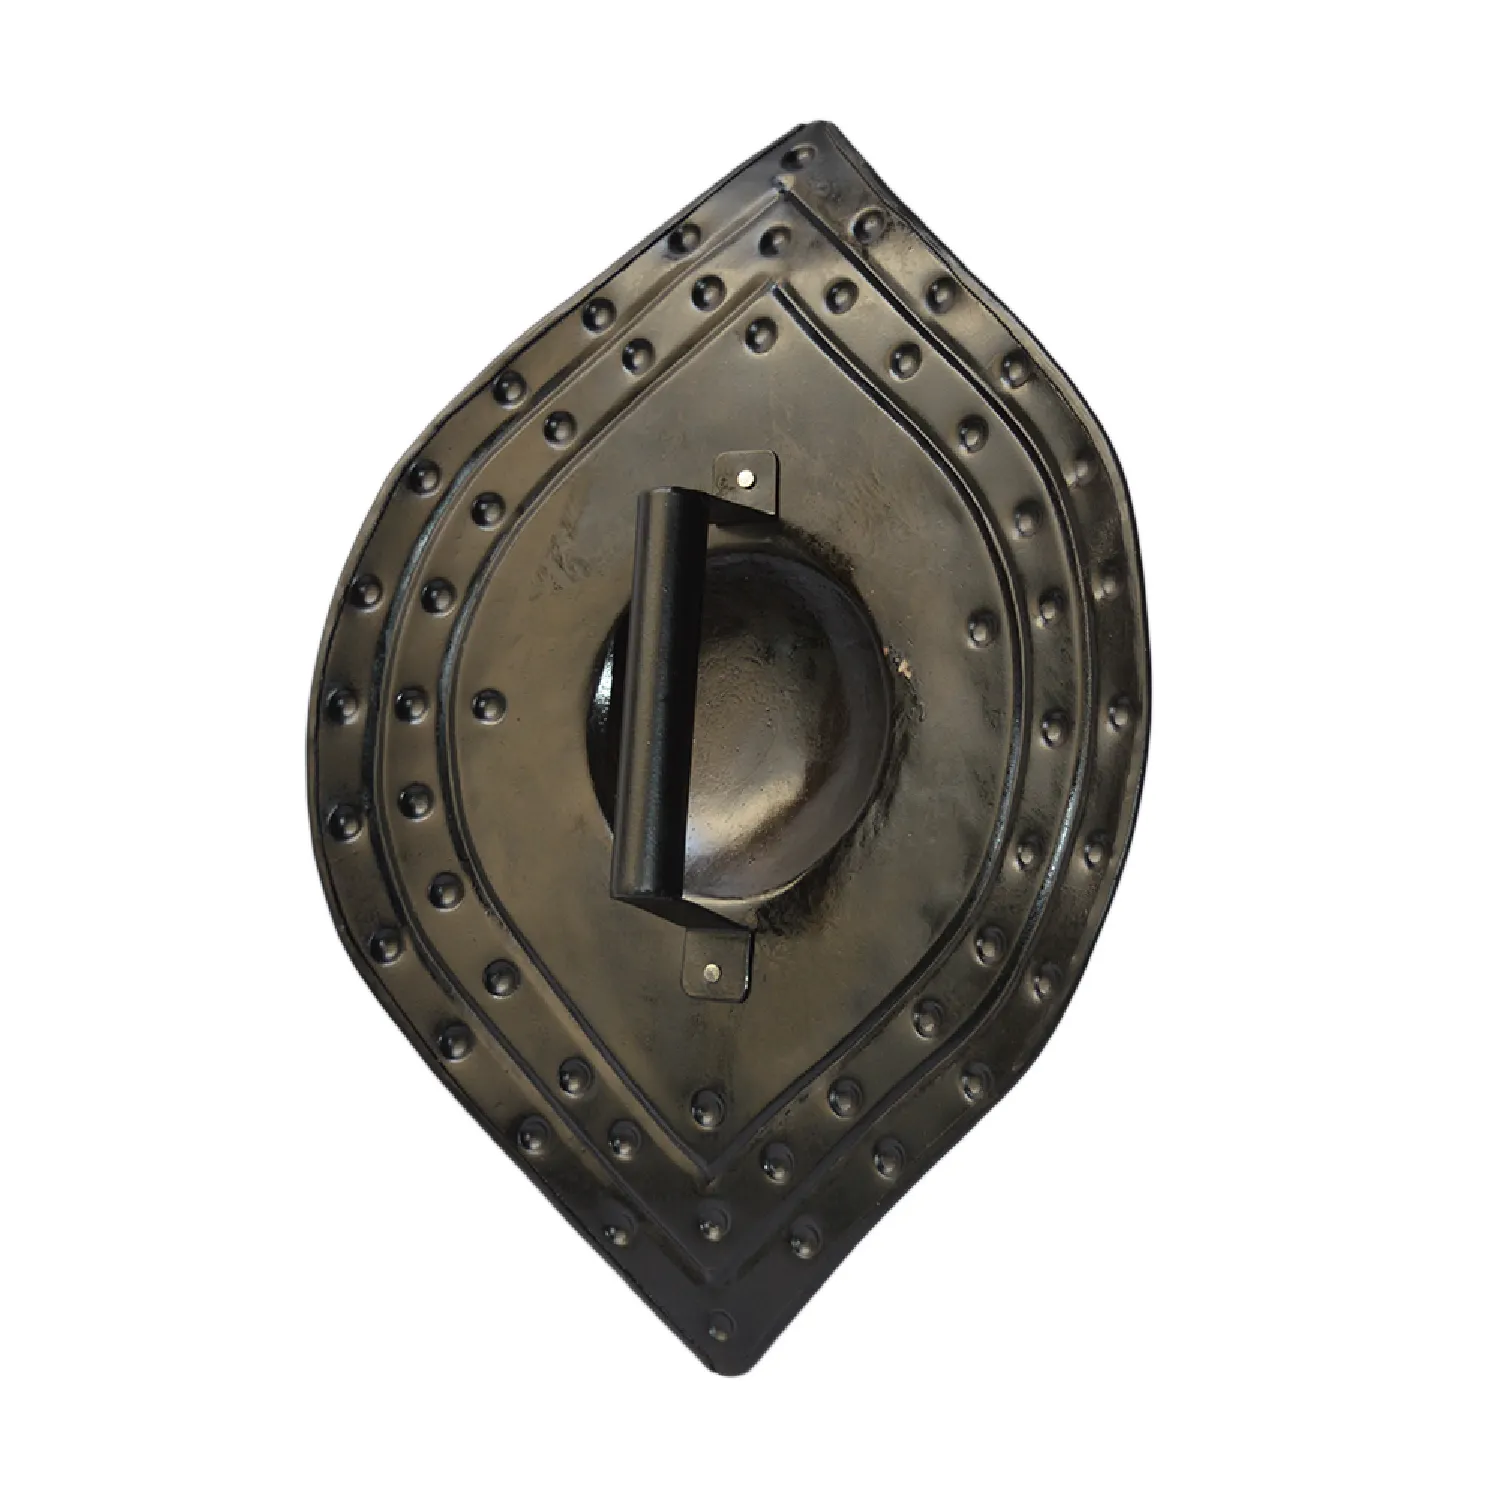 Dekor schwarz lackiert lackiert Finishing Design Armor Shield mit Solid Metal Design Shield